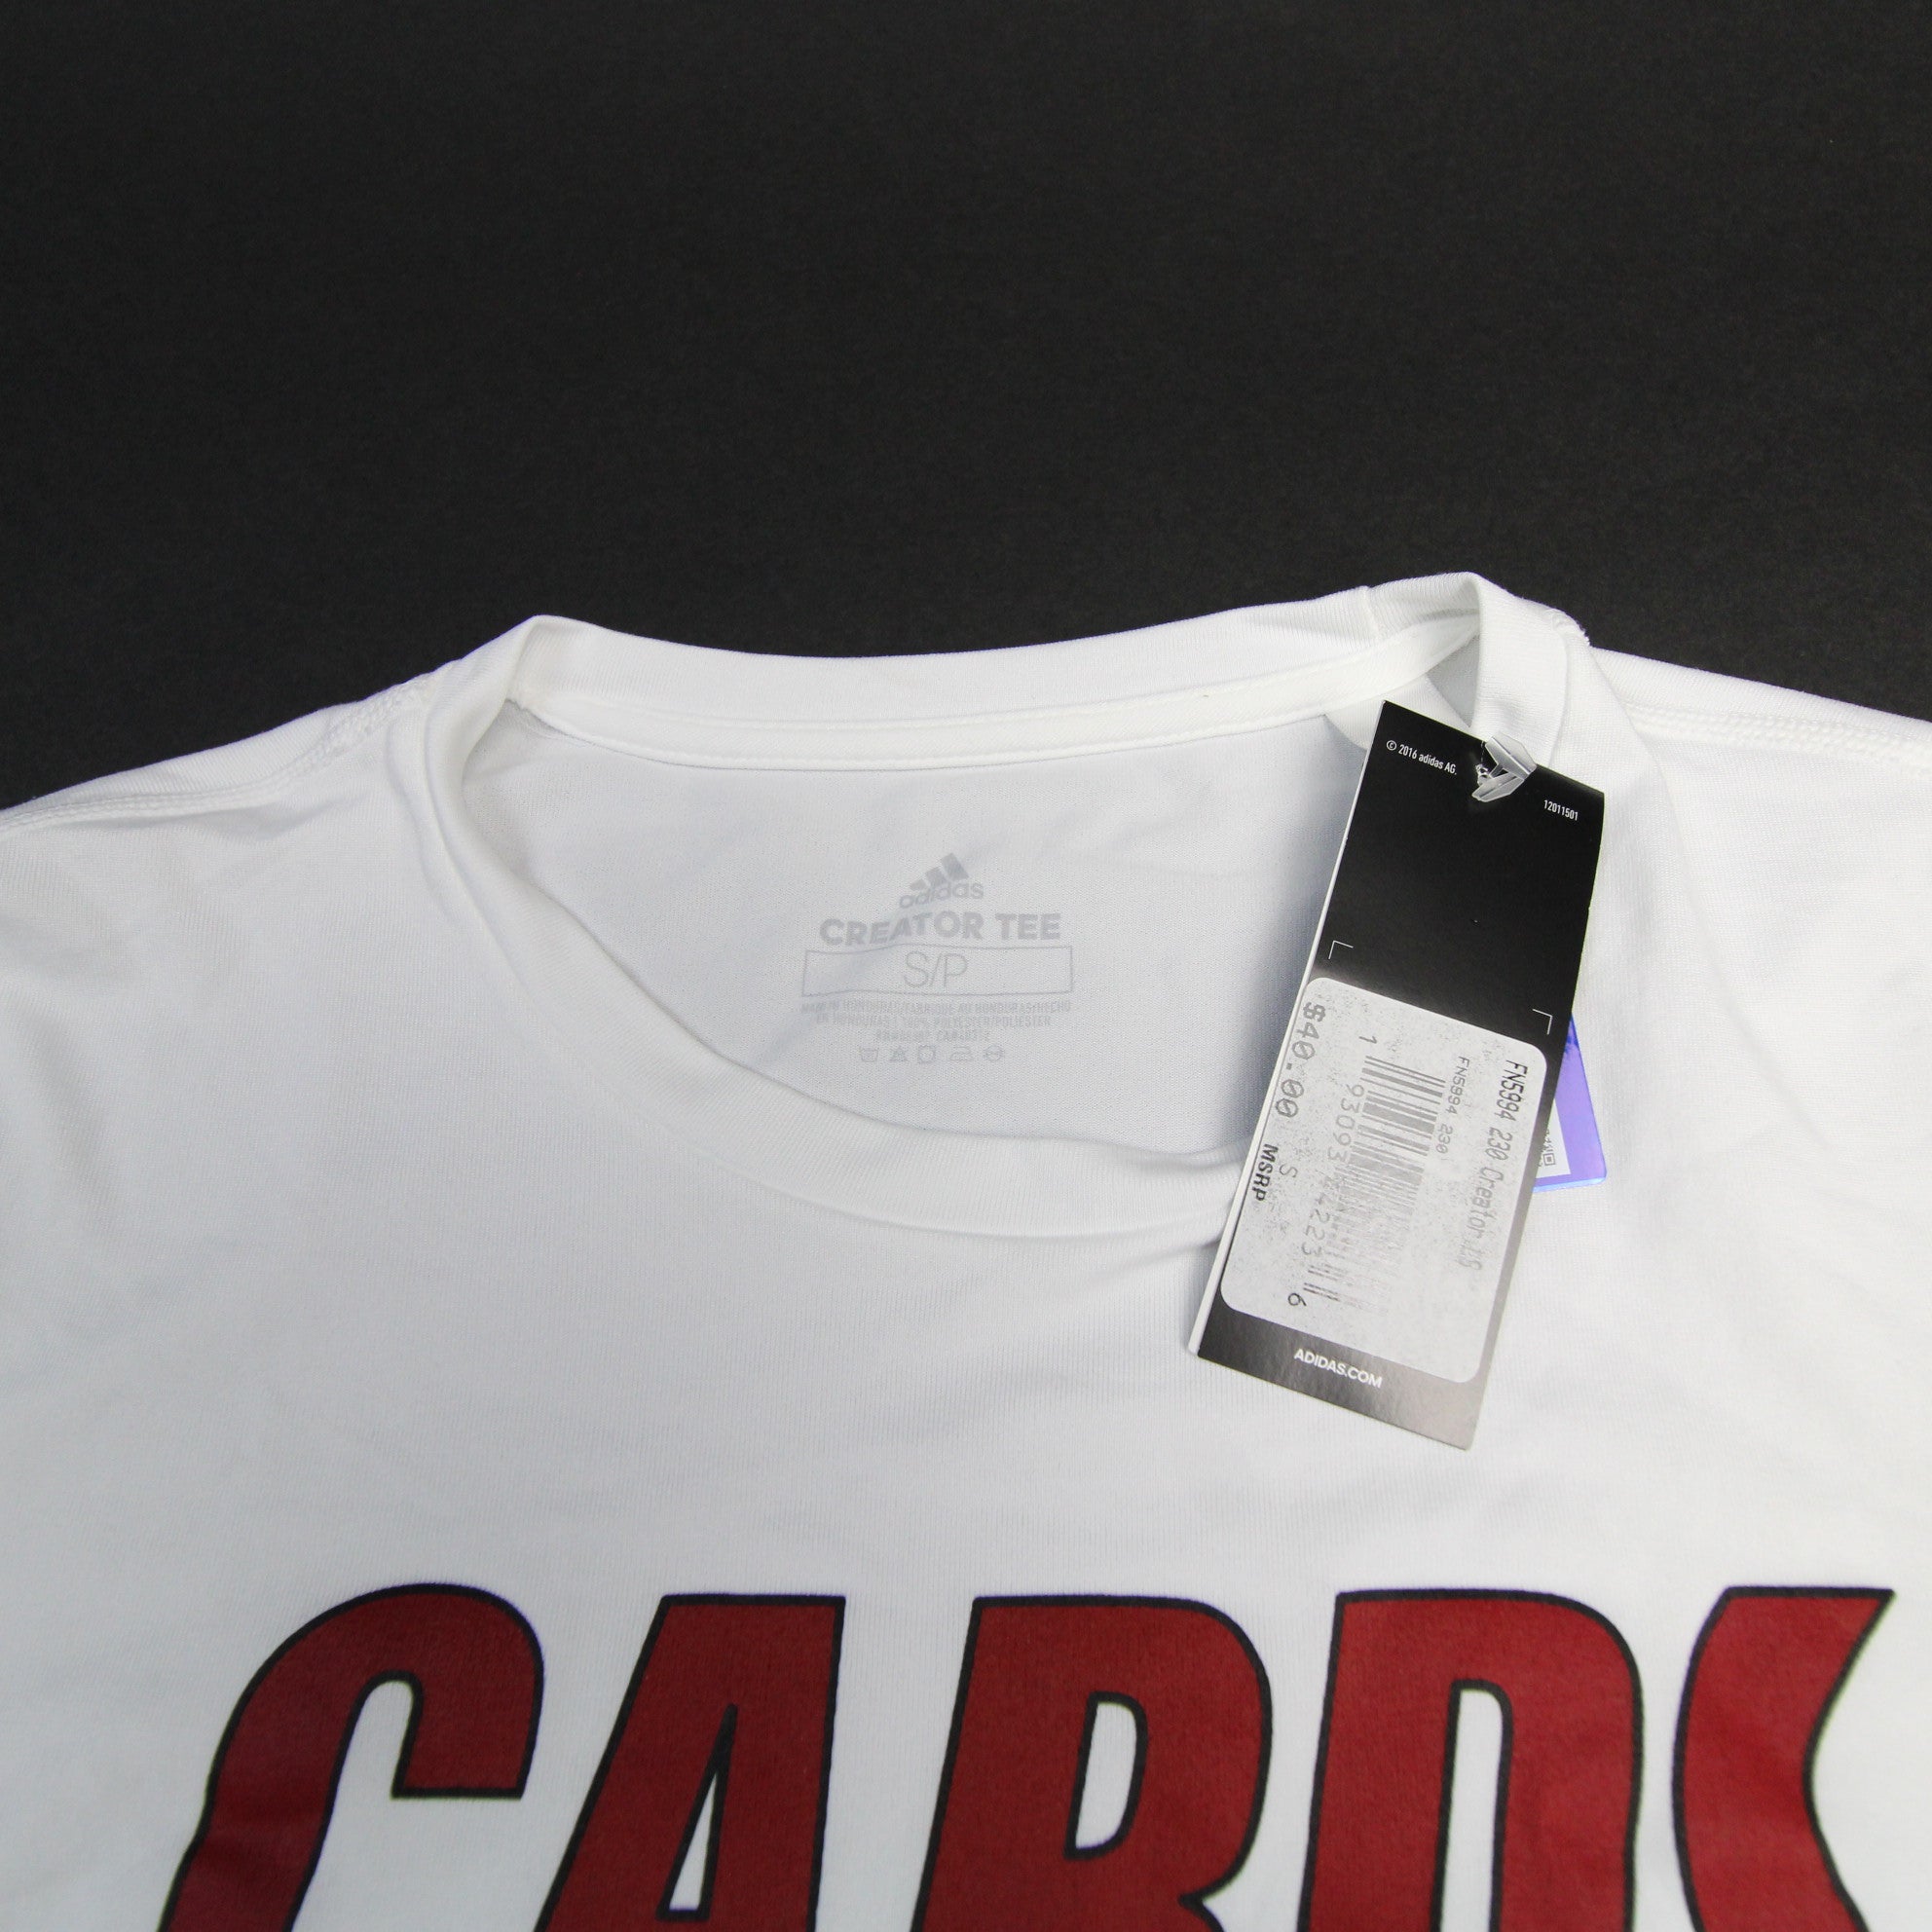 Louisville Cardinals adidas Creator Long Sleeve Shirt Women's Black New XS  | SidelineSwap